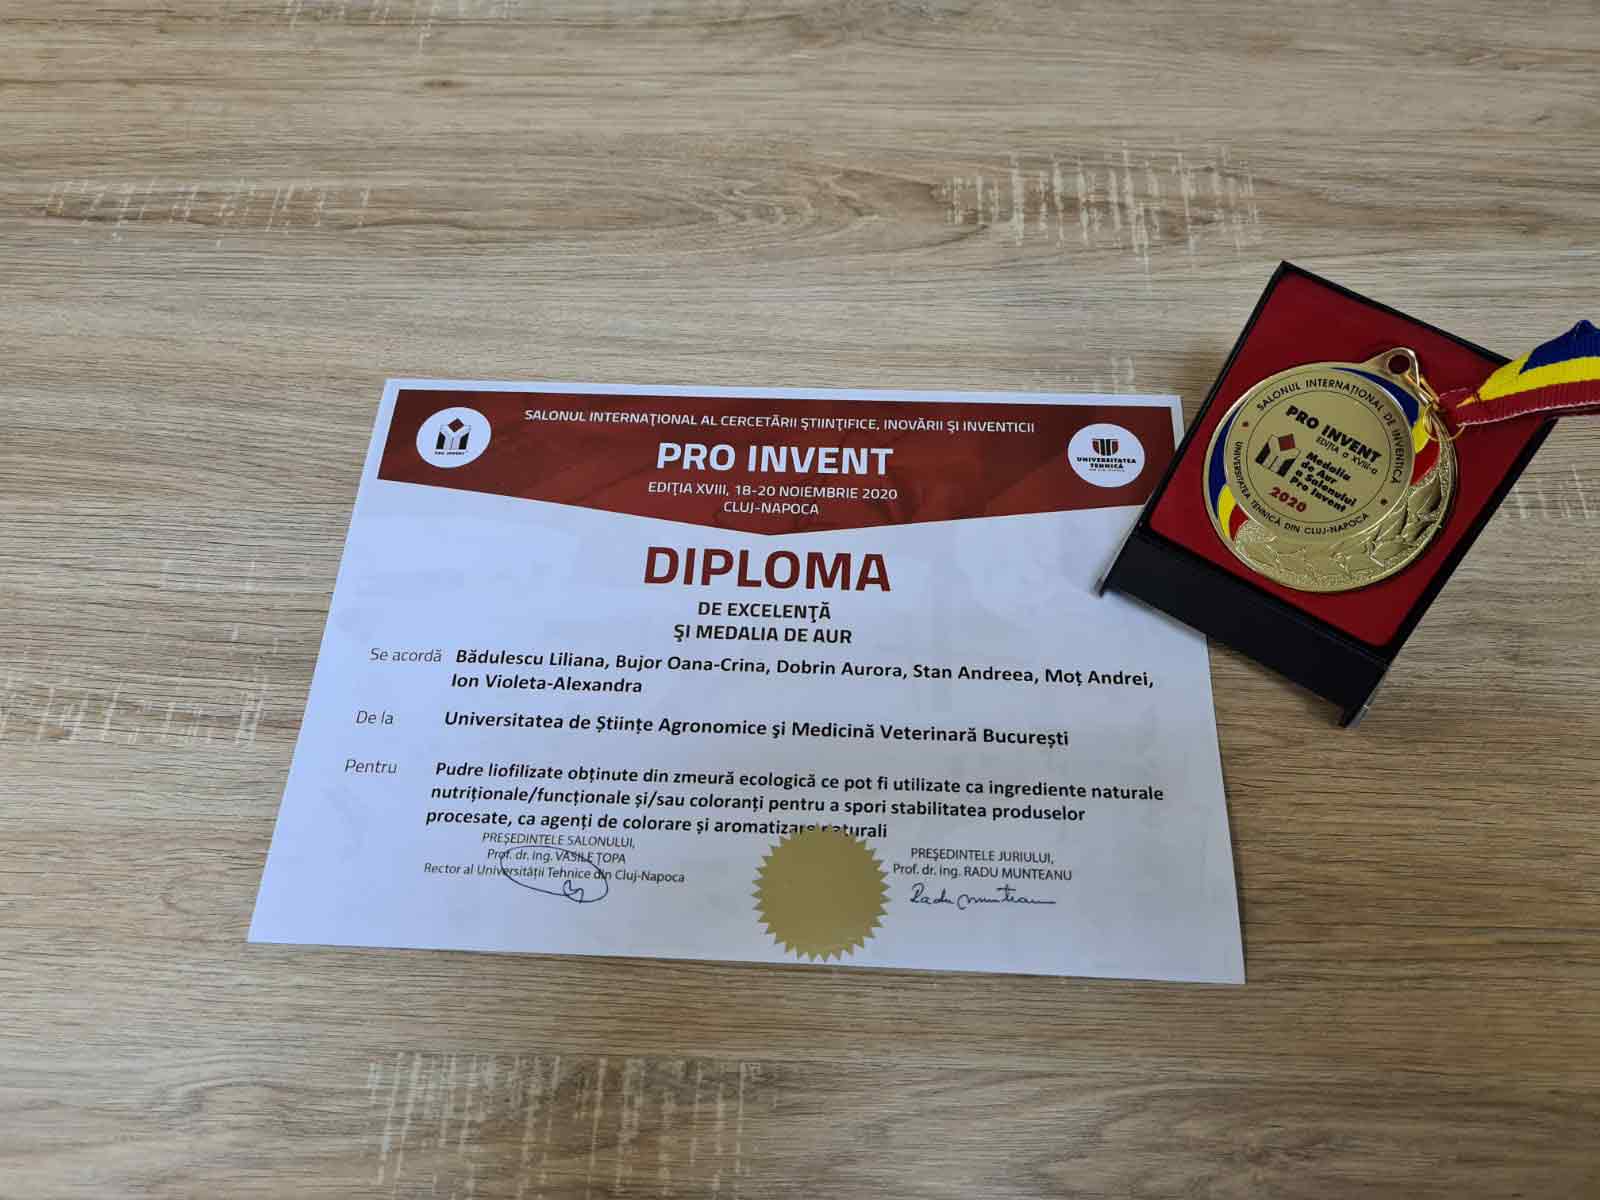 Diploma de excelenta si medalie de aur pudre din zmeura ecologica